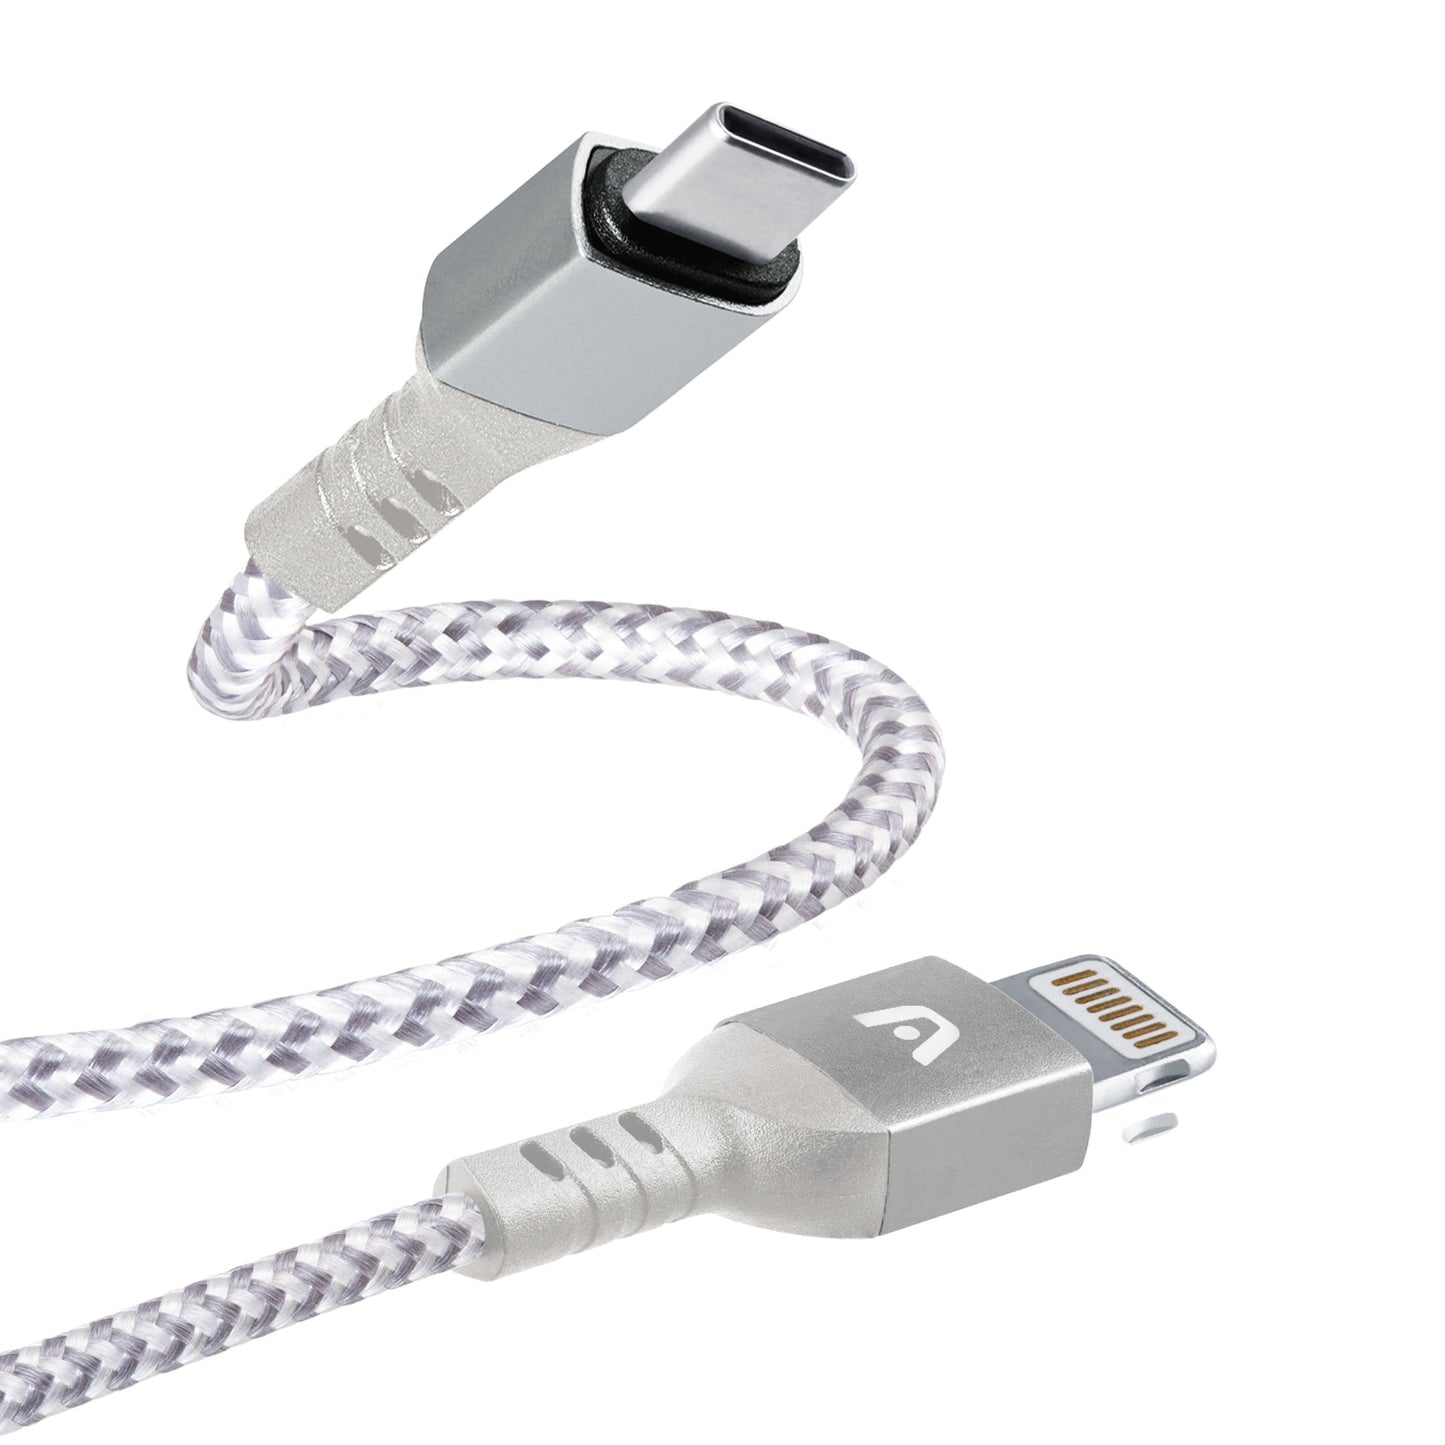 CABLE USB tipo C a Lightning - CARGA RÁPIDA Y SINCRONIZACIÓN - Trenzado de nailon - Conector de metal - Empalme de cable flexible - 6FT/1.8M